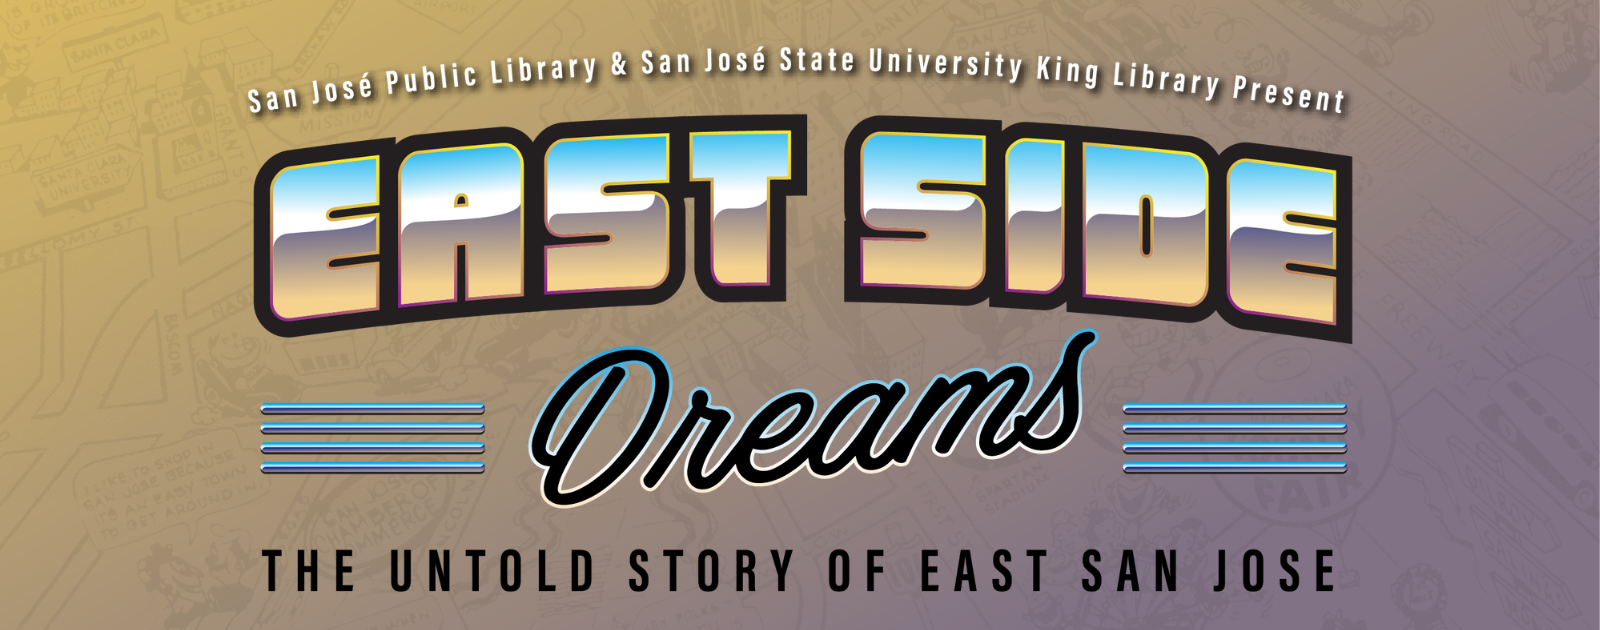 East Side Dreams: The Untold Story of East San José